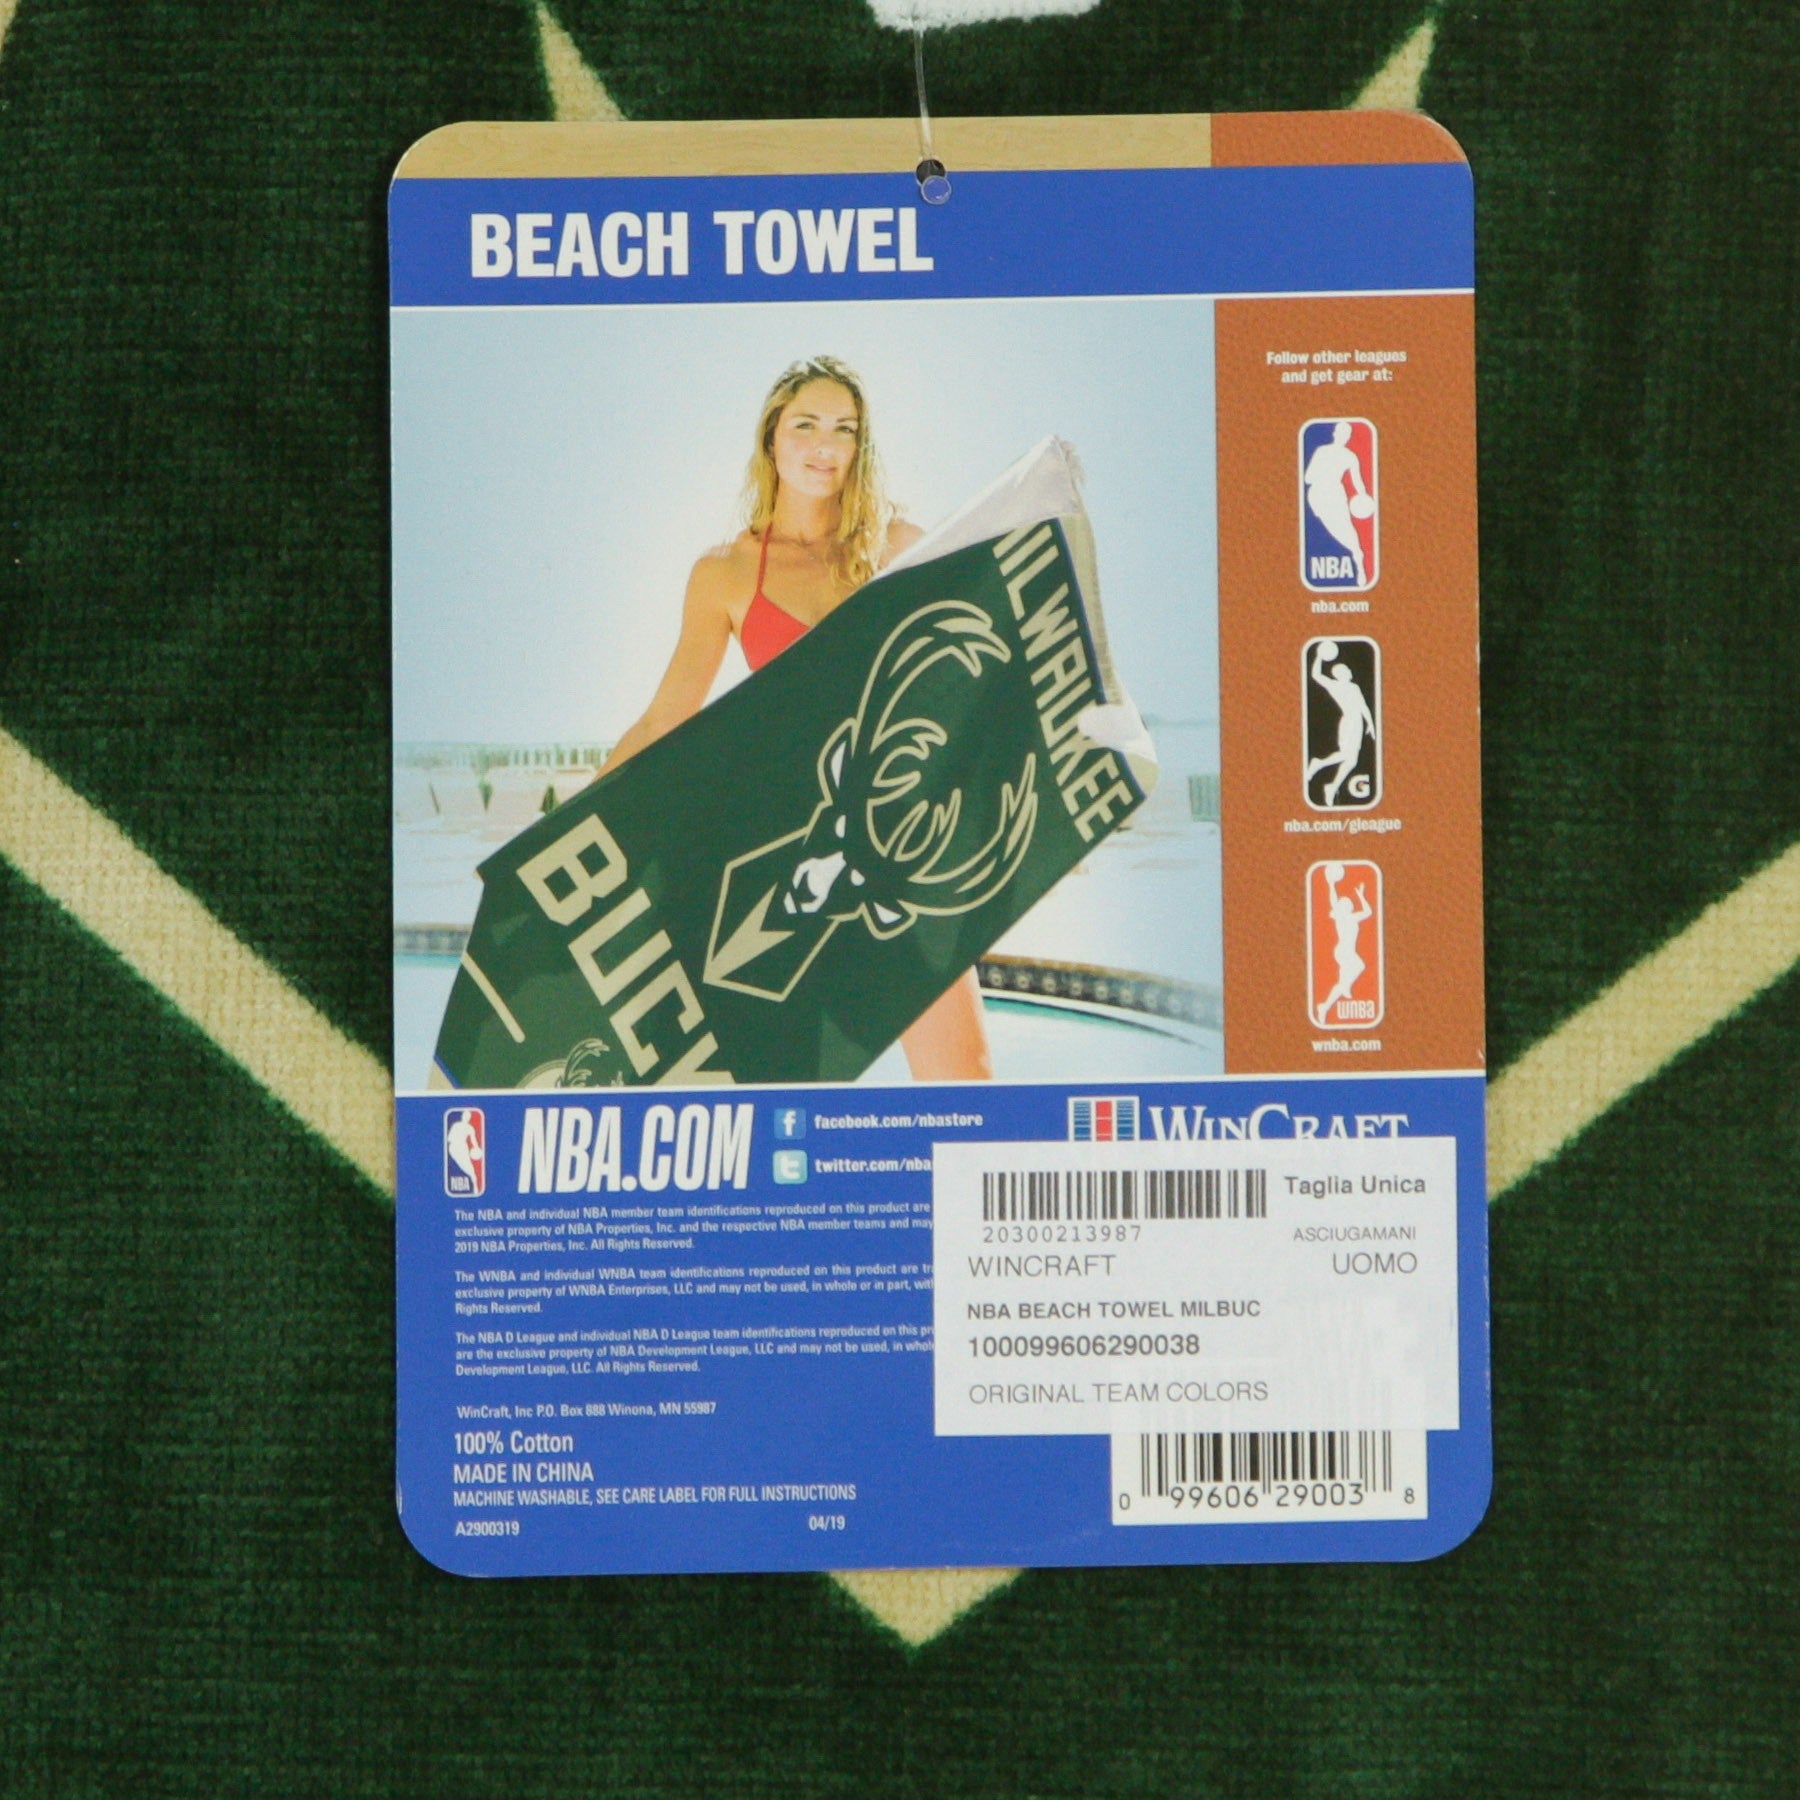 Asciugamano Unisex Nba Beach Towel Milbuc Original Team Colors